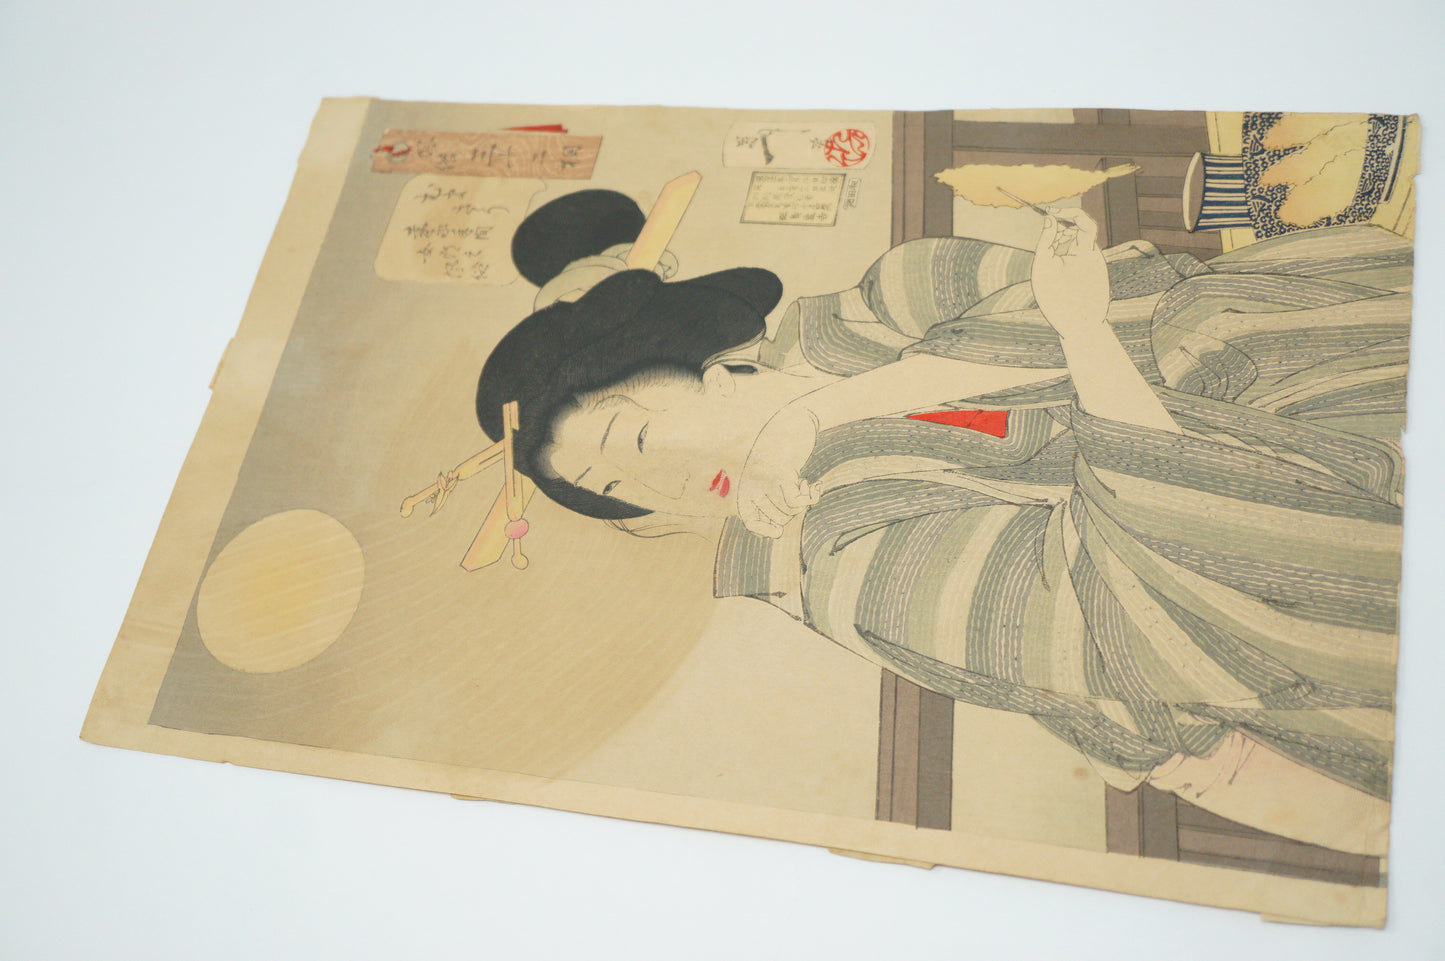 Seltener Yoshitoshi Holzschnitt Original "Looking Delicious" aus Japan 0310E10